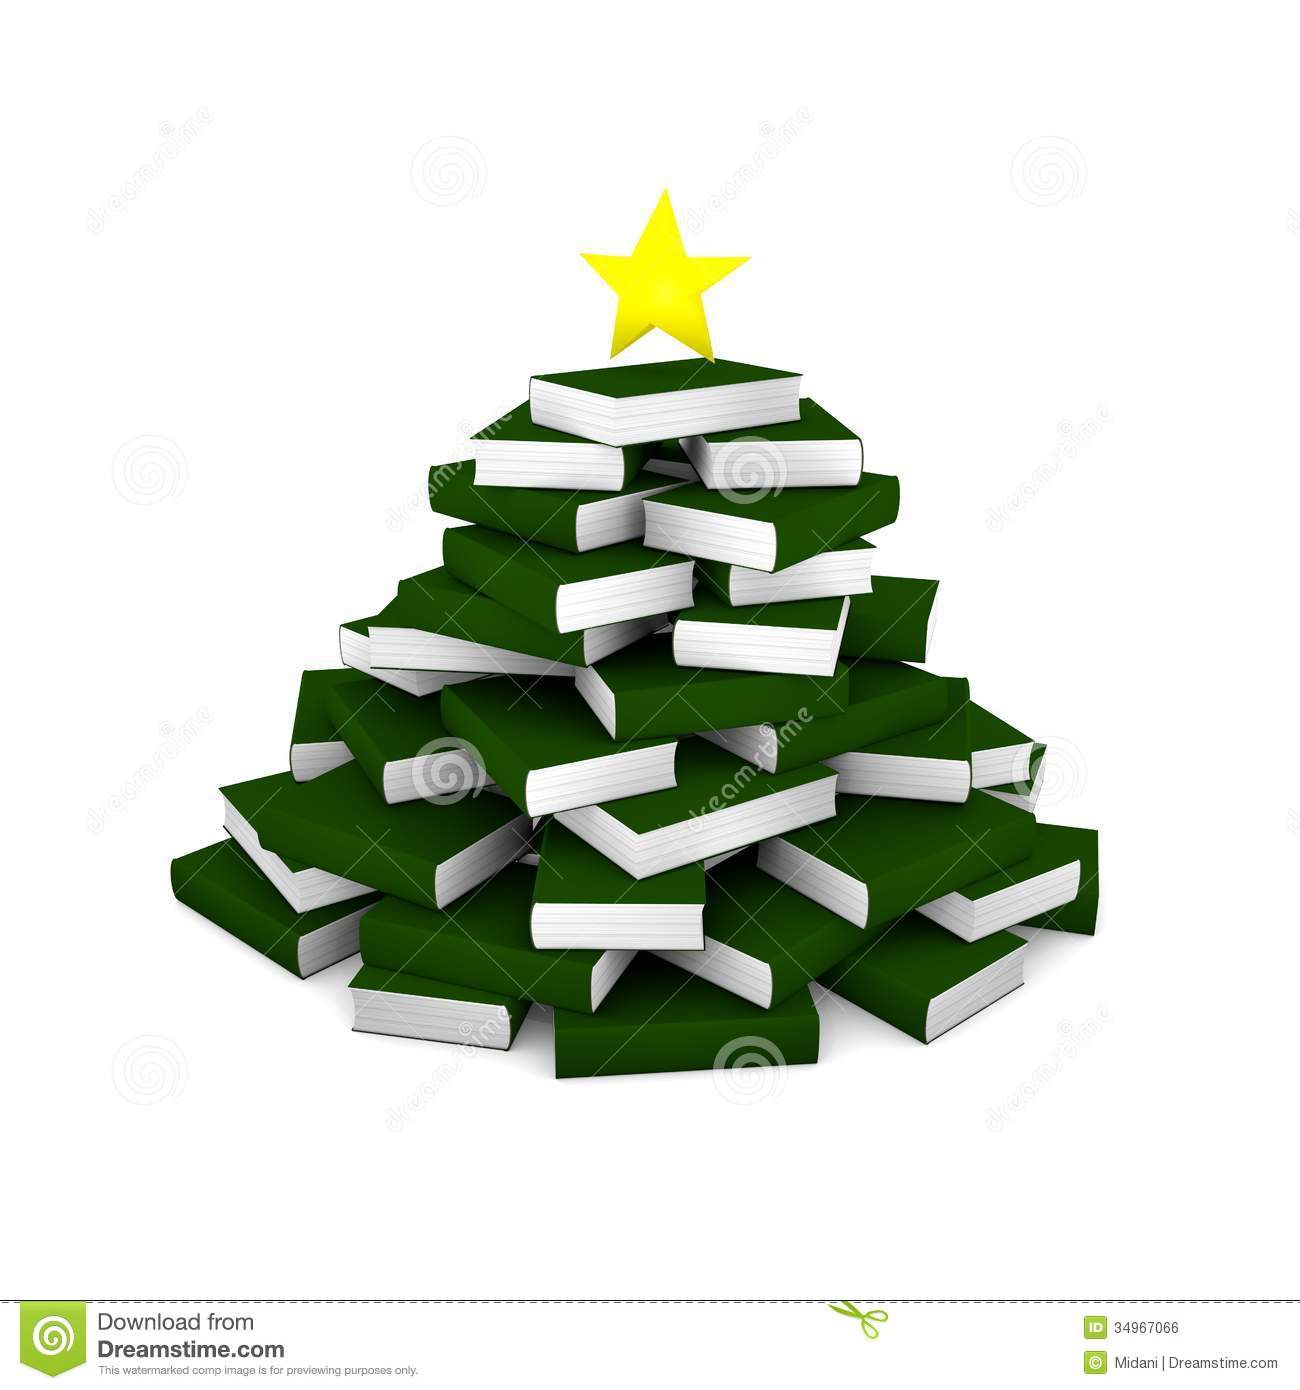 Christmas Tree Of Books Royalty Free Stock Image   Image  34967066